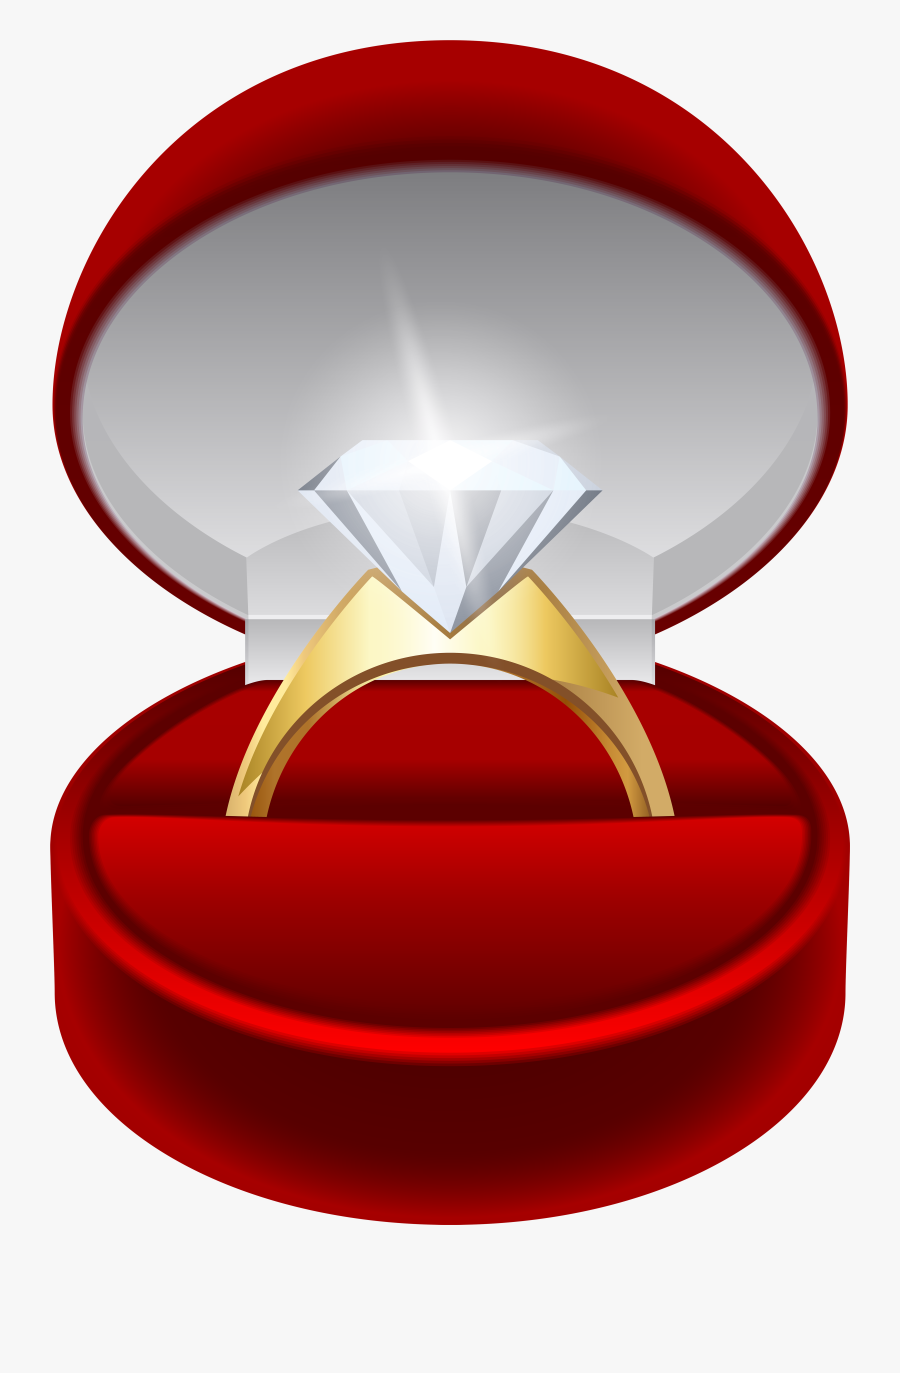 Engagement Ring Transparent Clip Art Image - Engagement Ring Png, Transparent Clipart